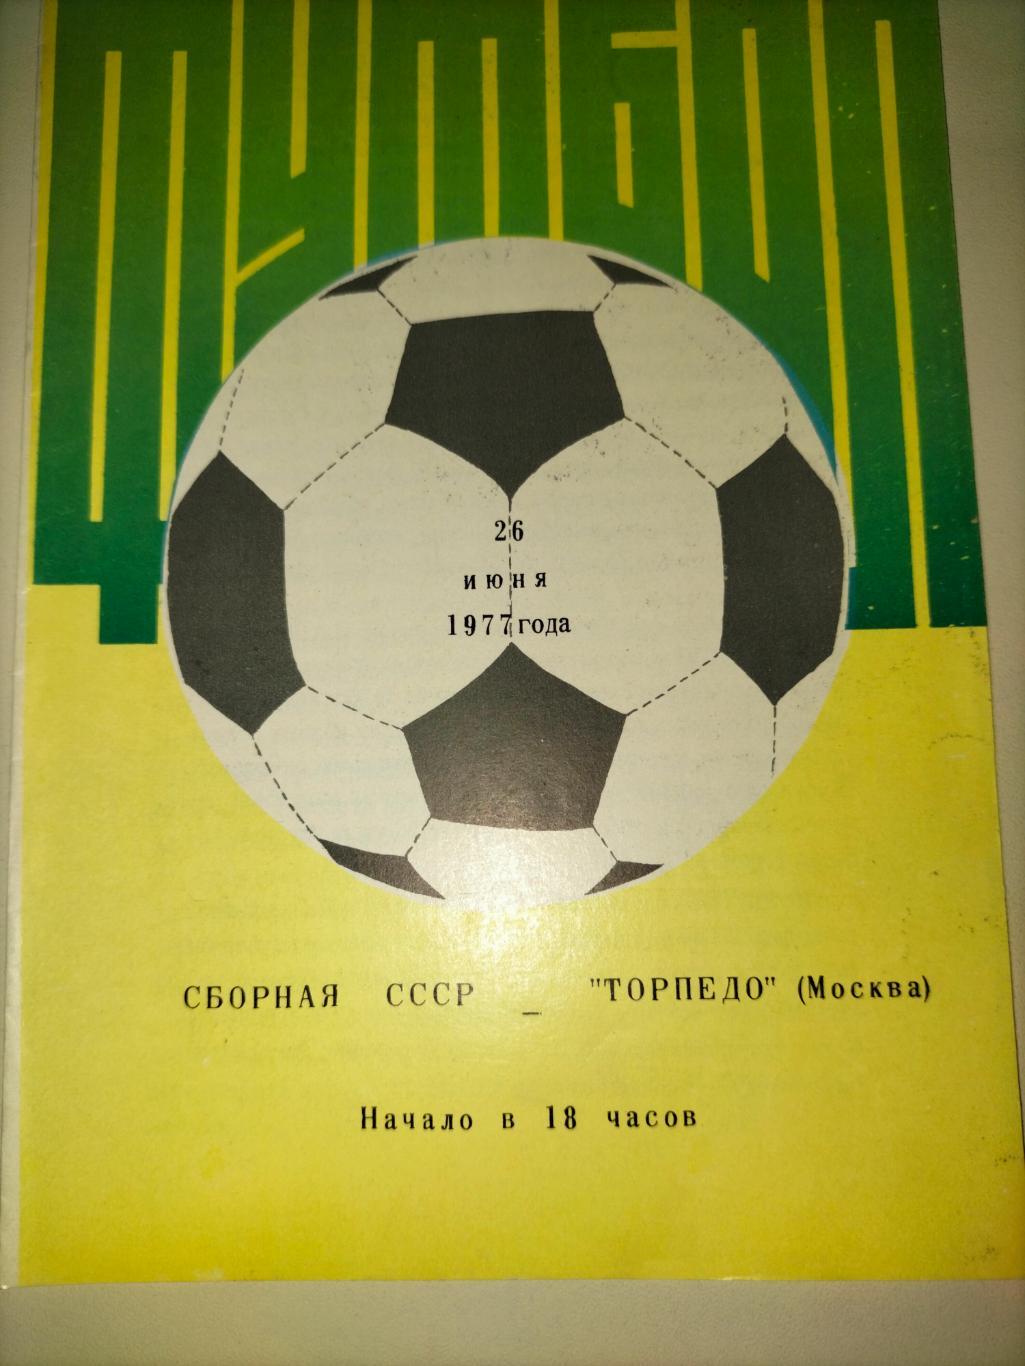 Сборная СССР - Торпедо Москва 1977